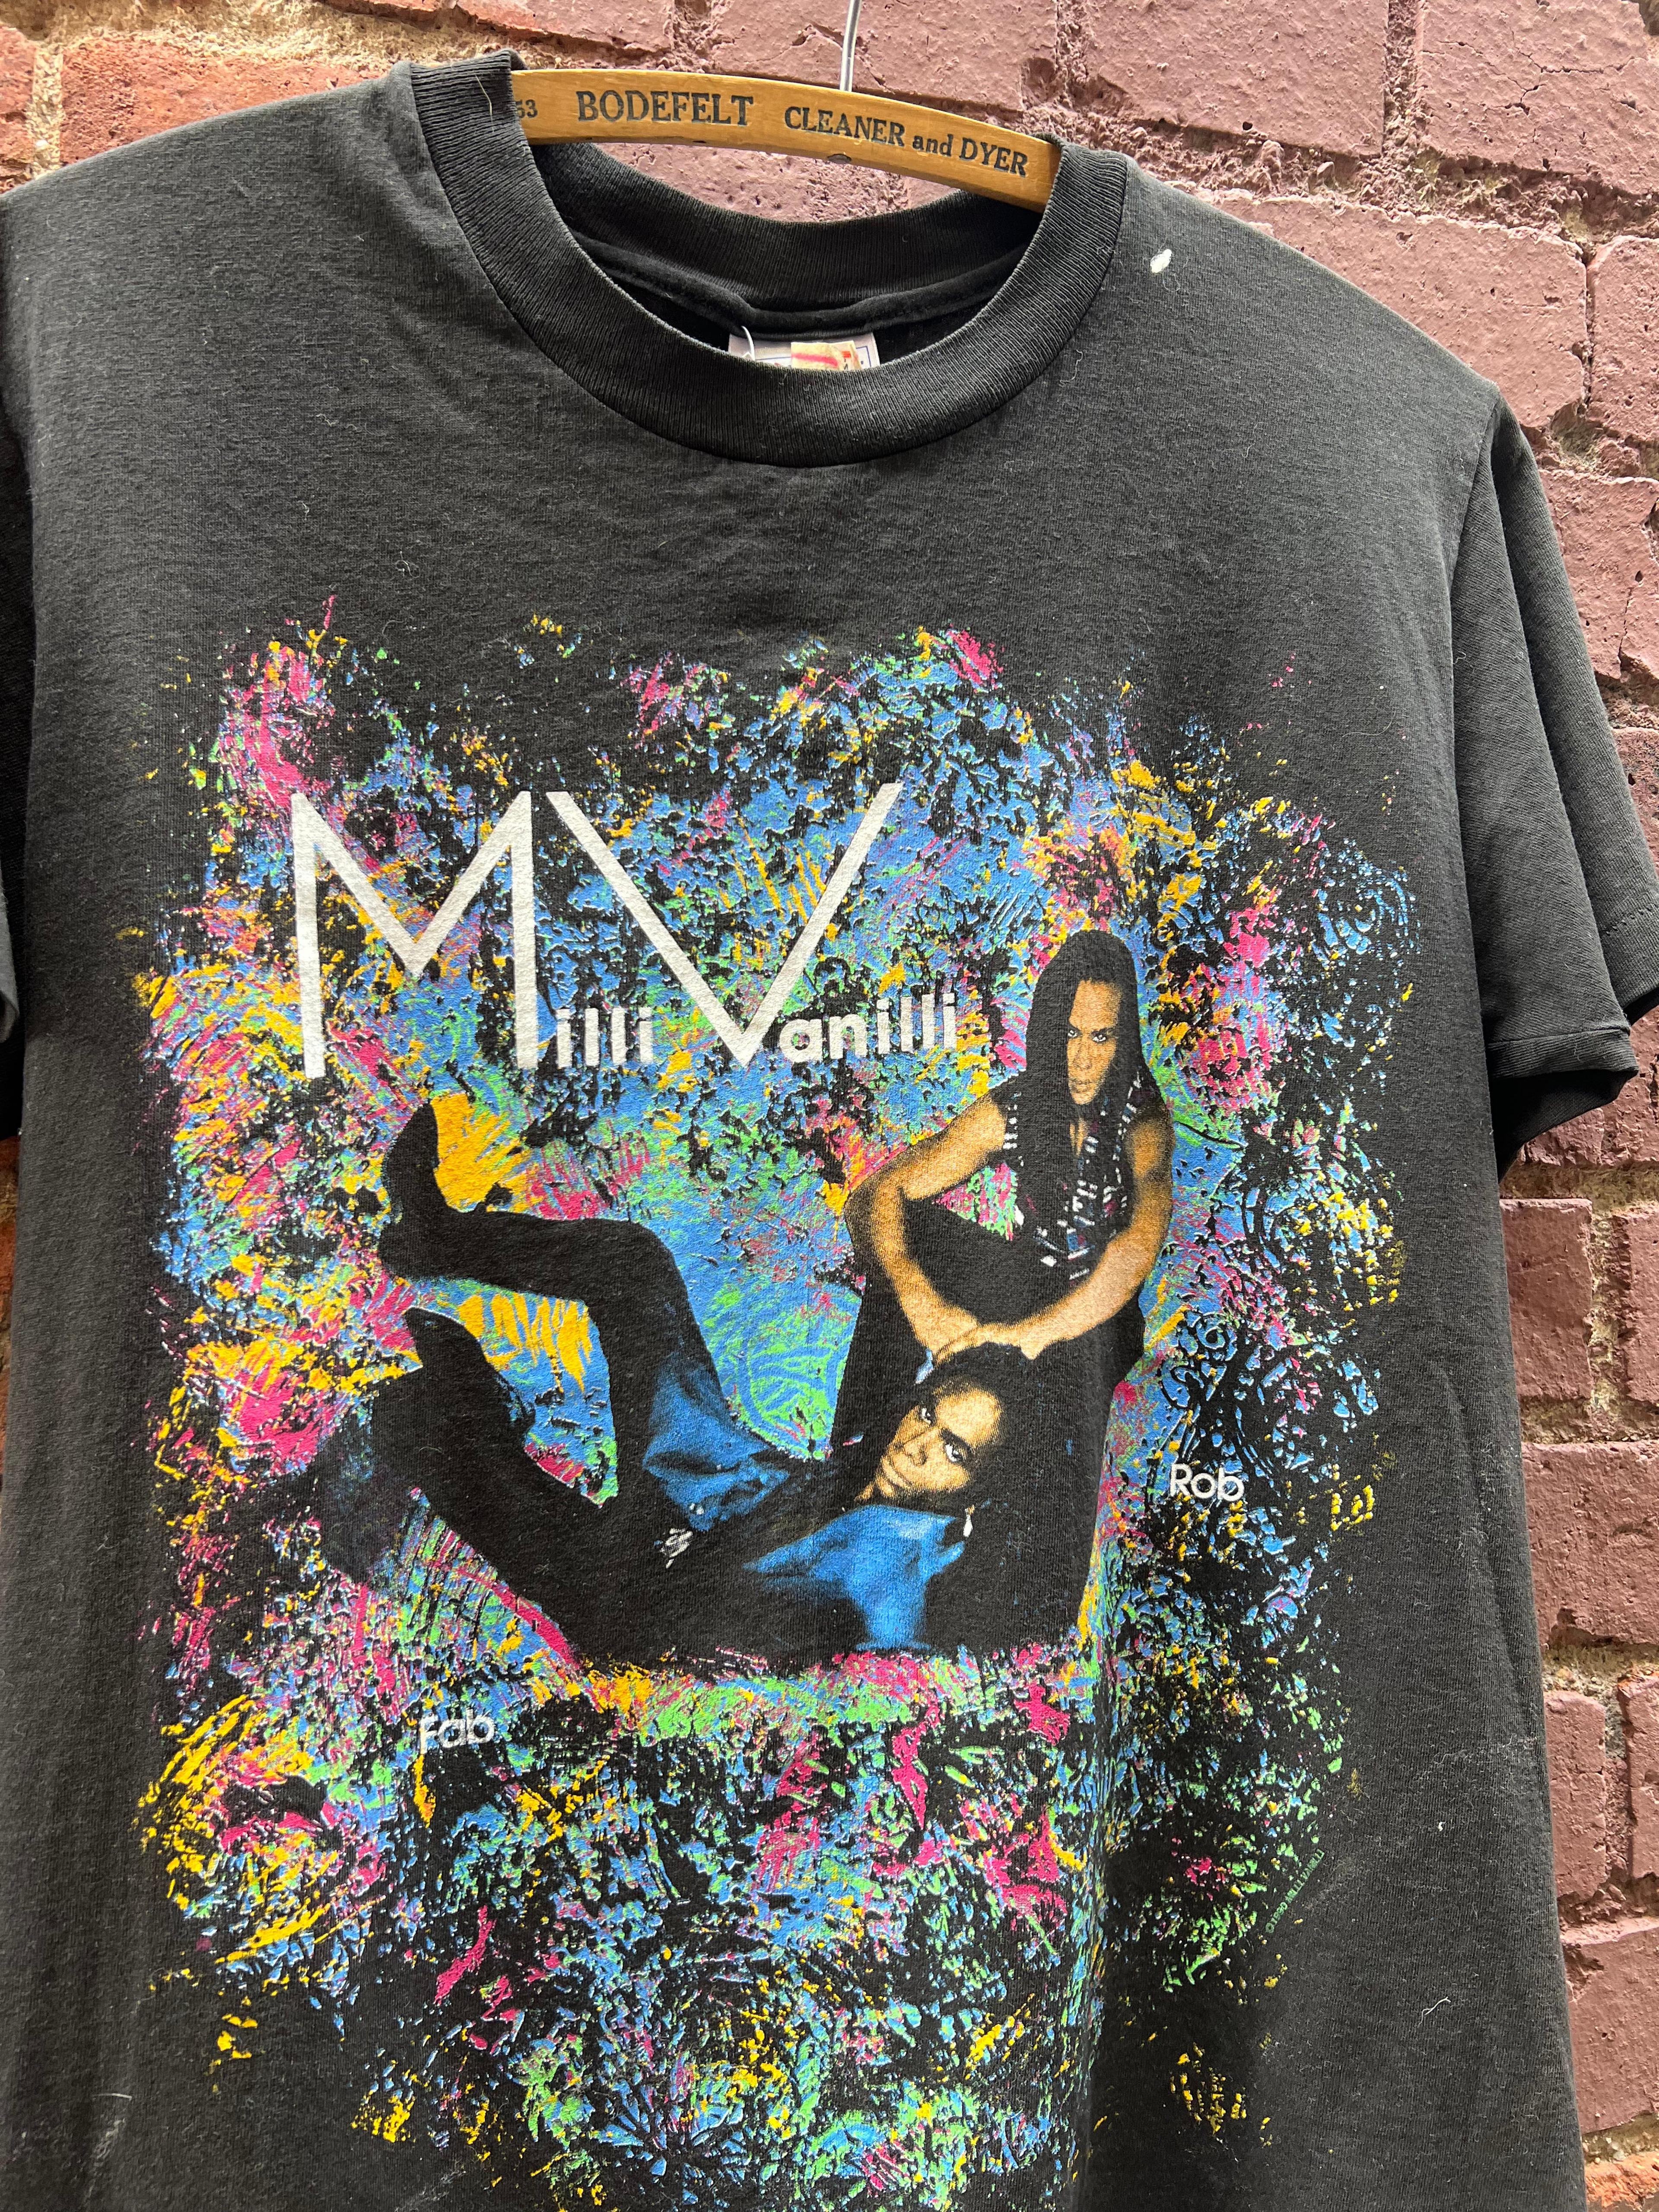 NTWRK - 1990s Milli Vanilli Photo Vintage T-Shirt - Size M